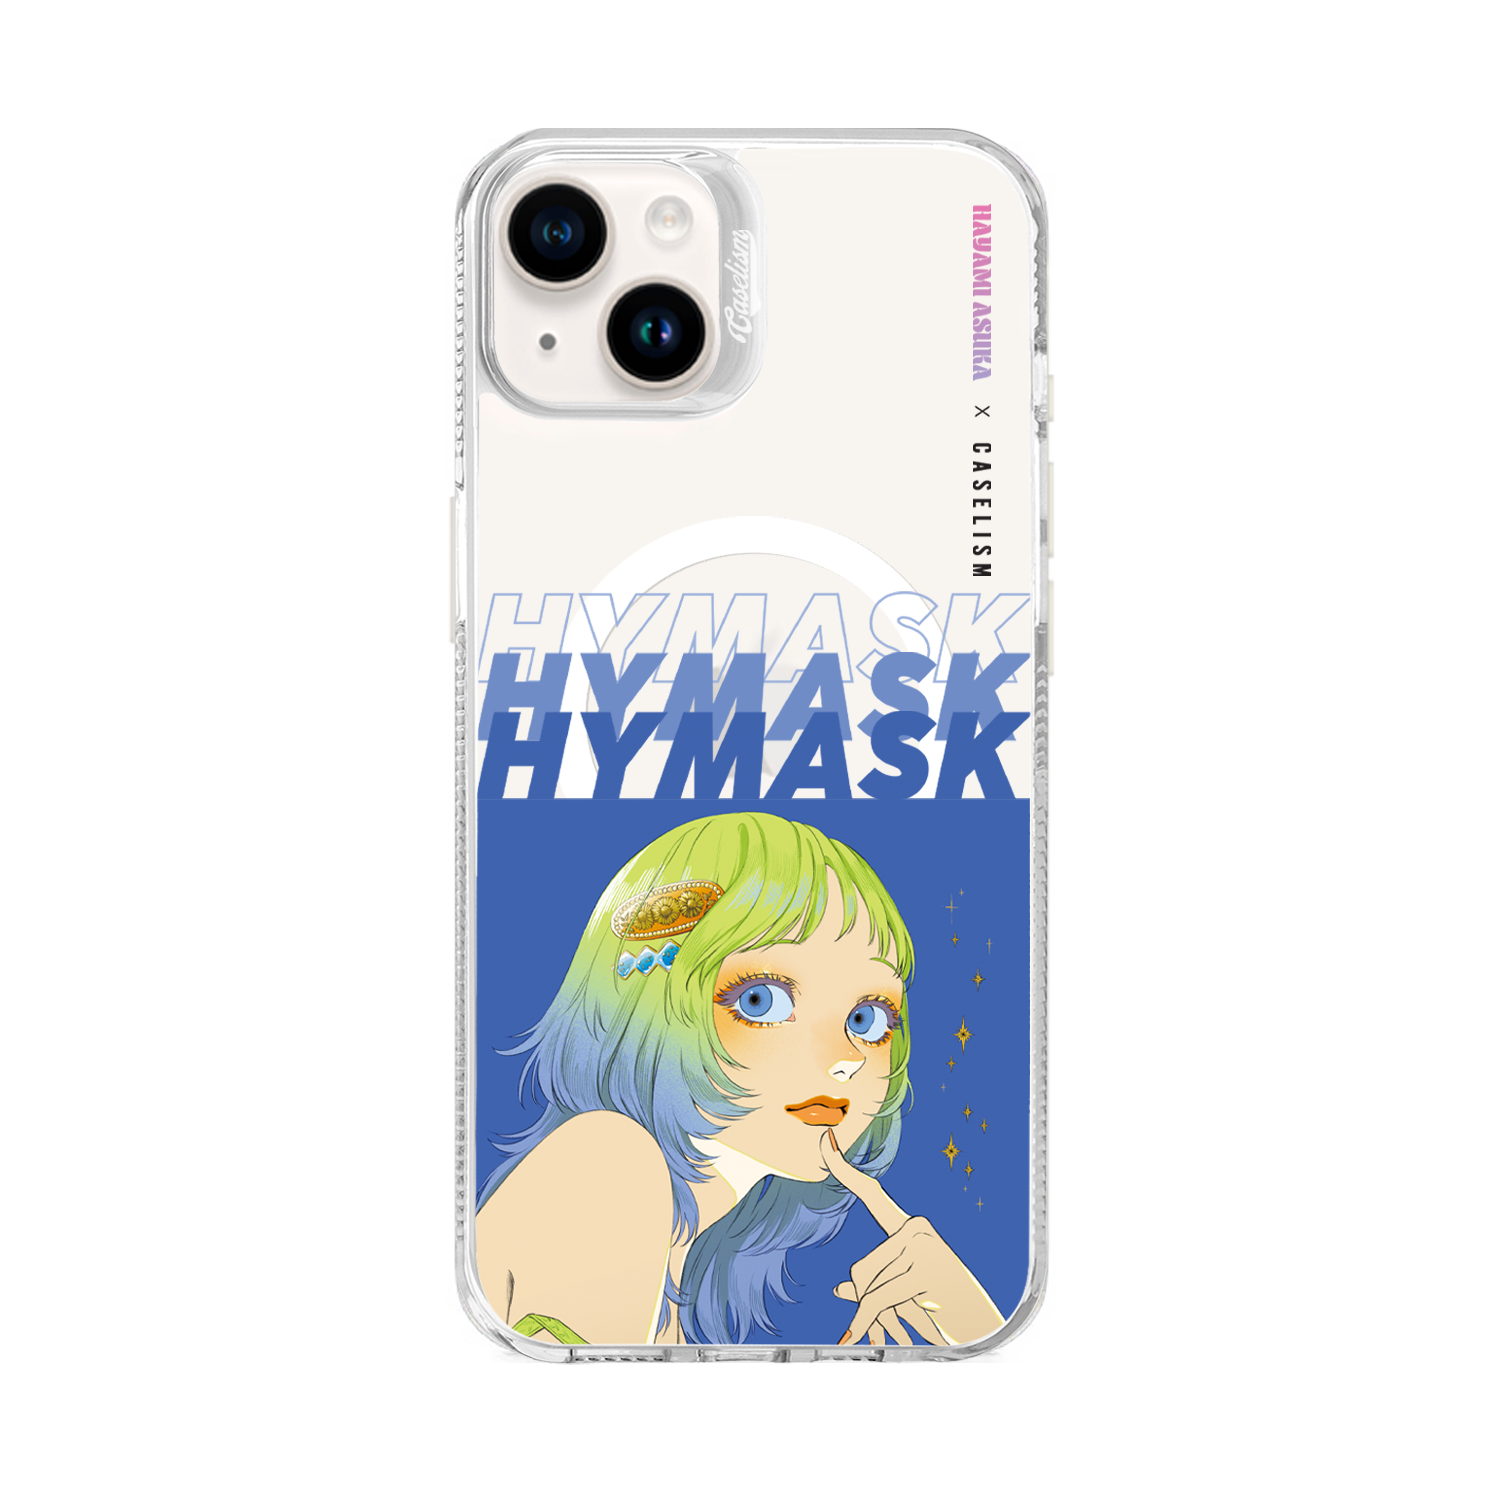 HAYA002 - ColorLite Case for iPhone